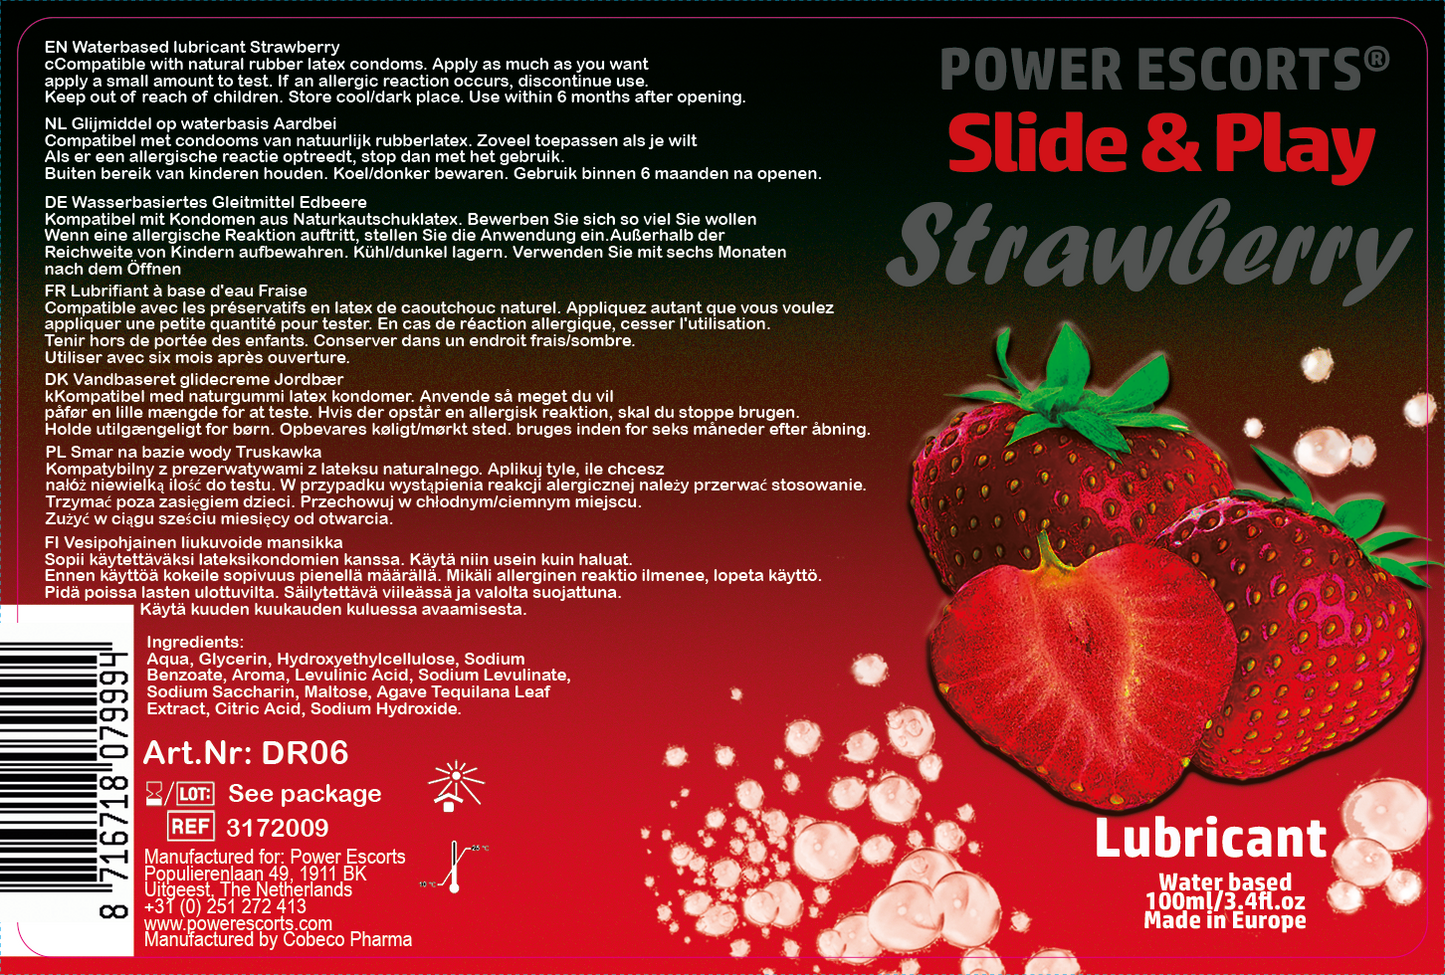 Power Escorts Strawberry Lubricant 100 ML - Slide & Play - easy bottle - Brandnew design - Waterbased - DR06